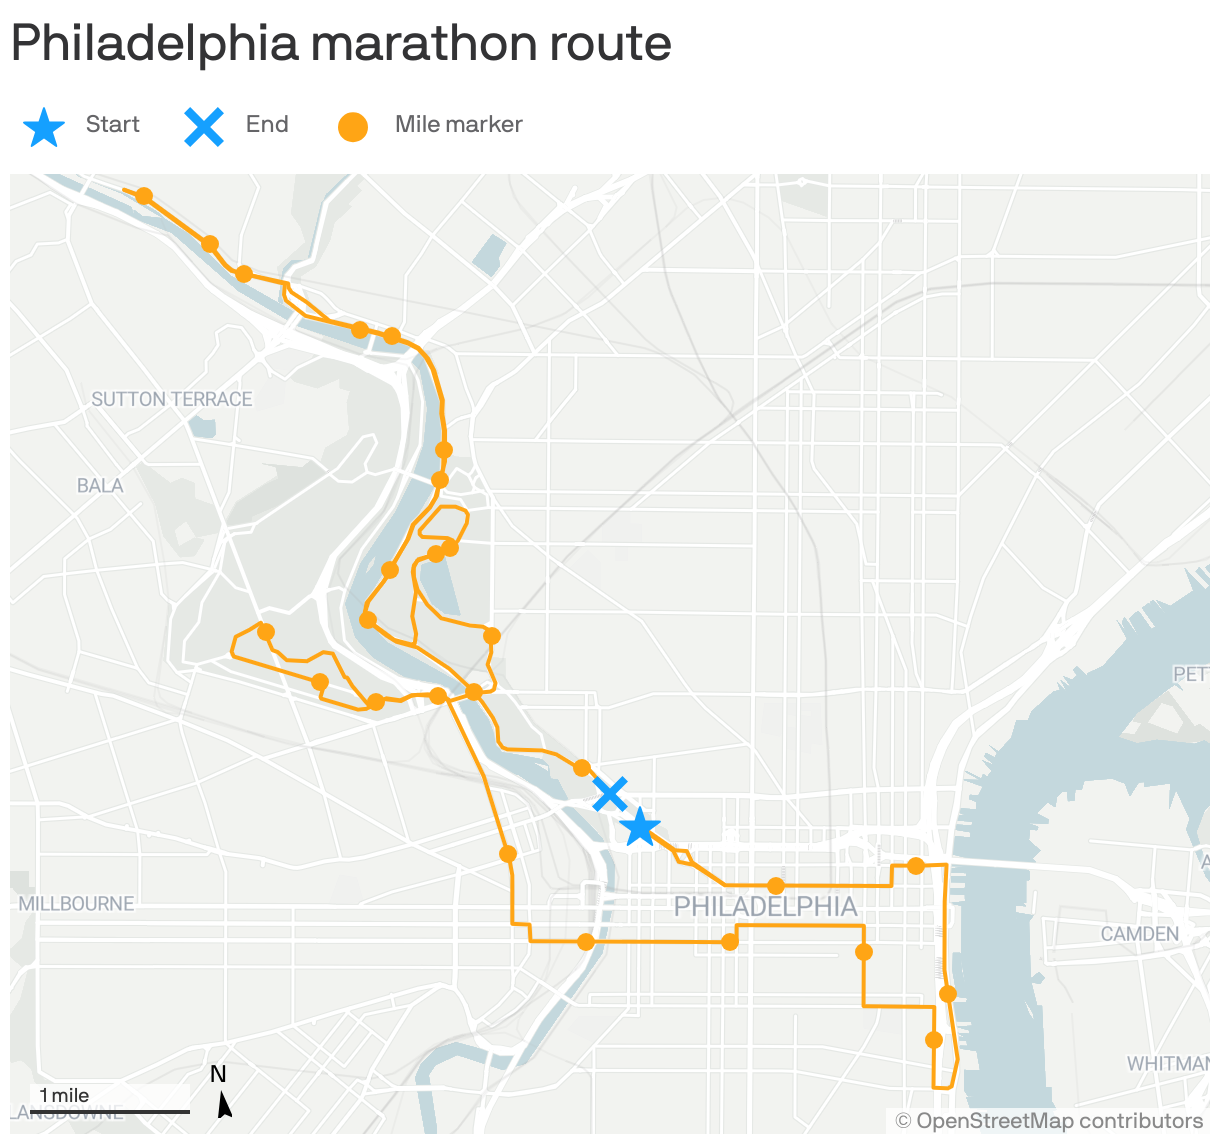 Philadelphia marathon route